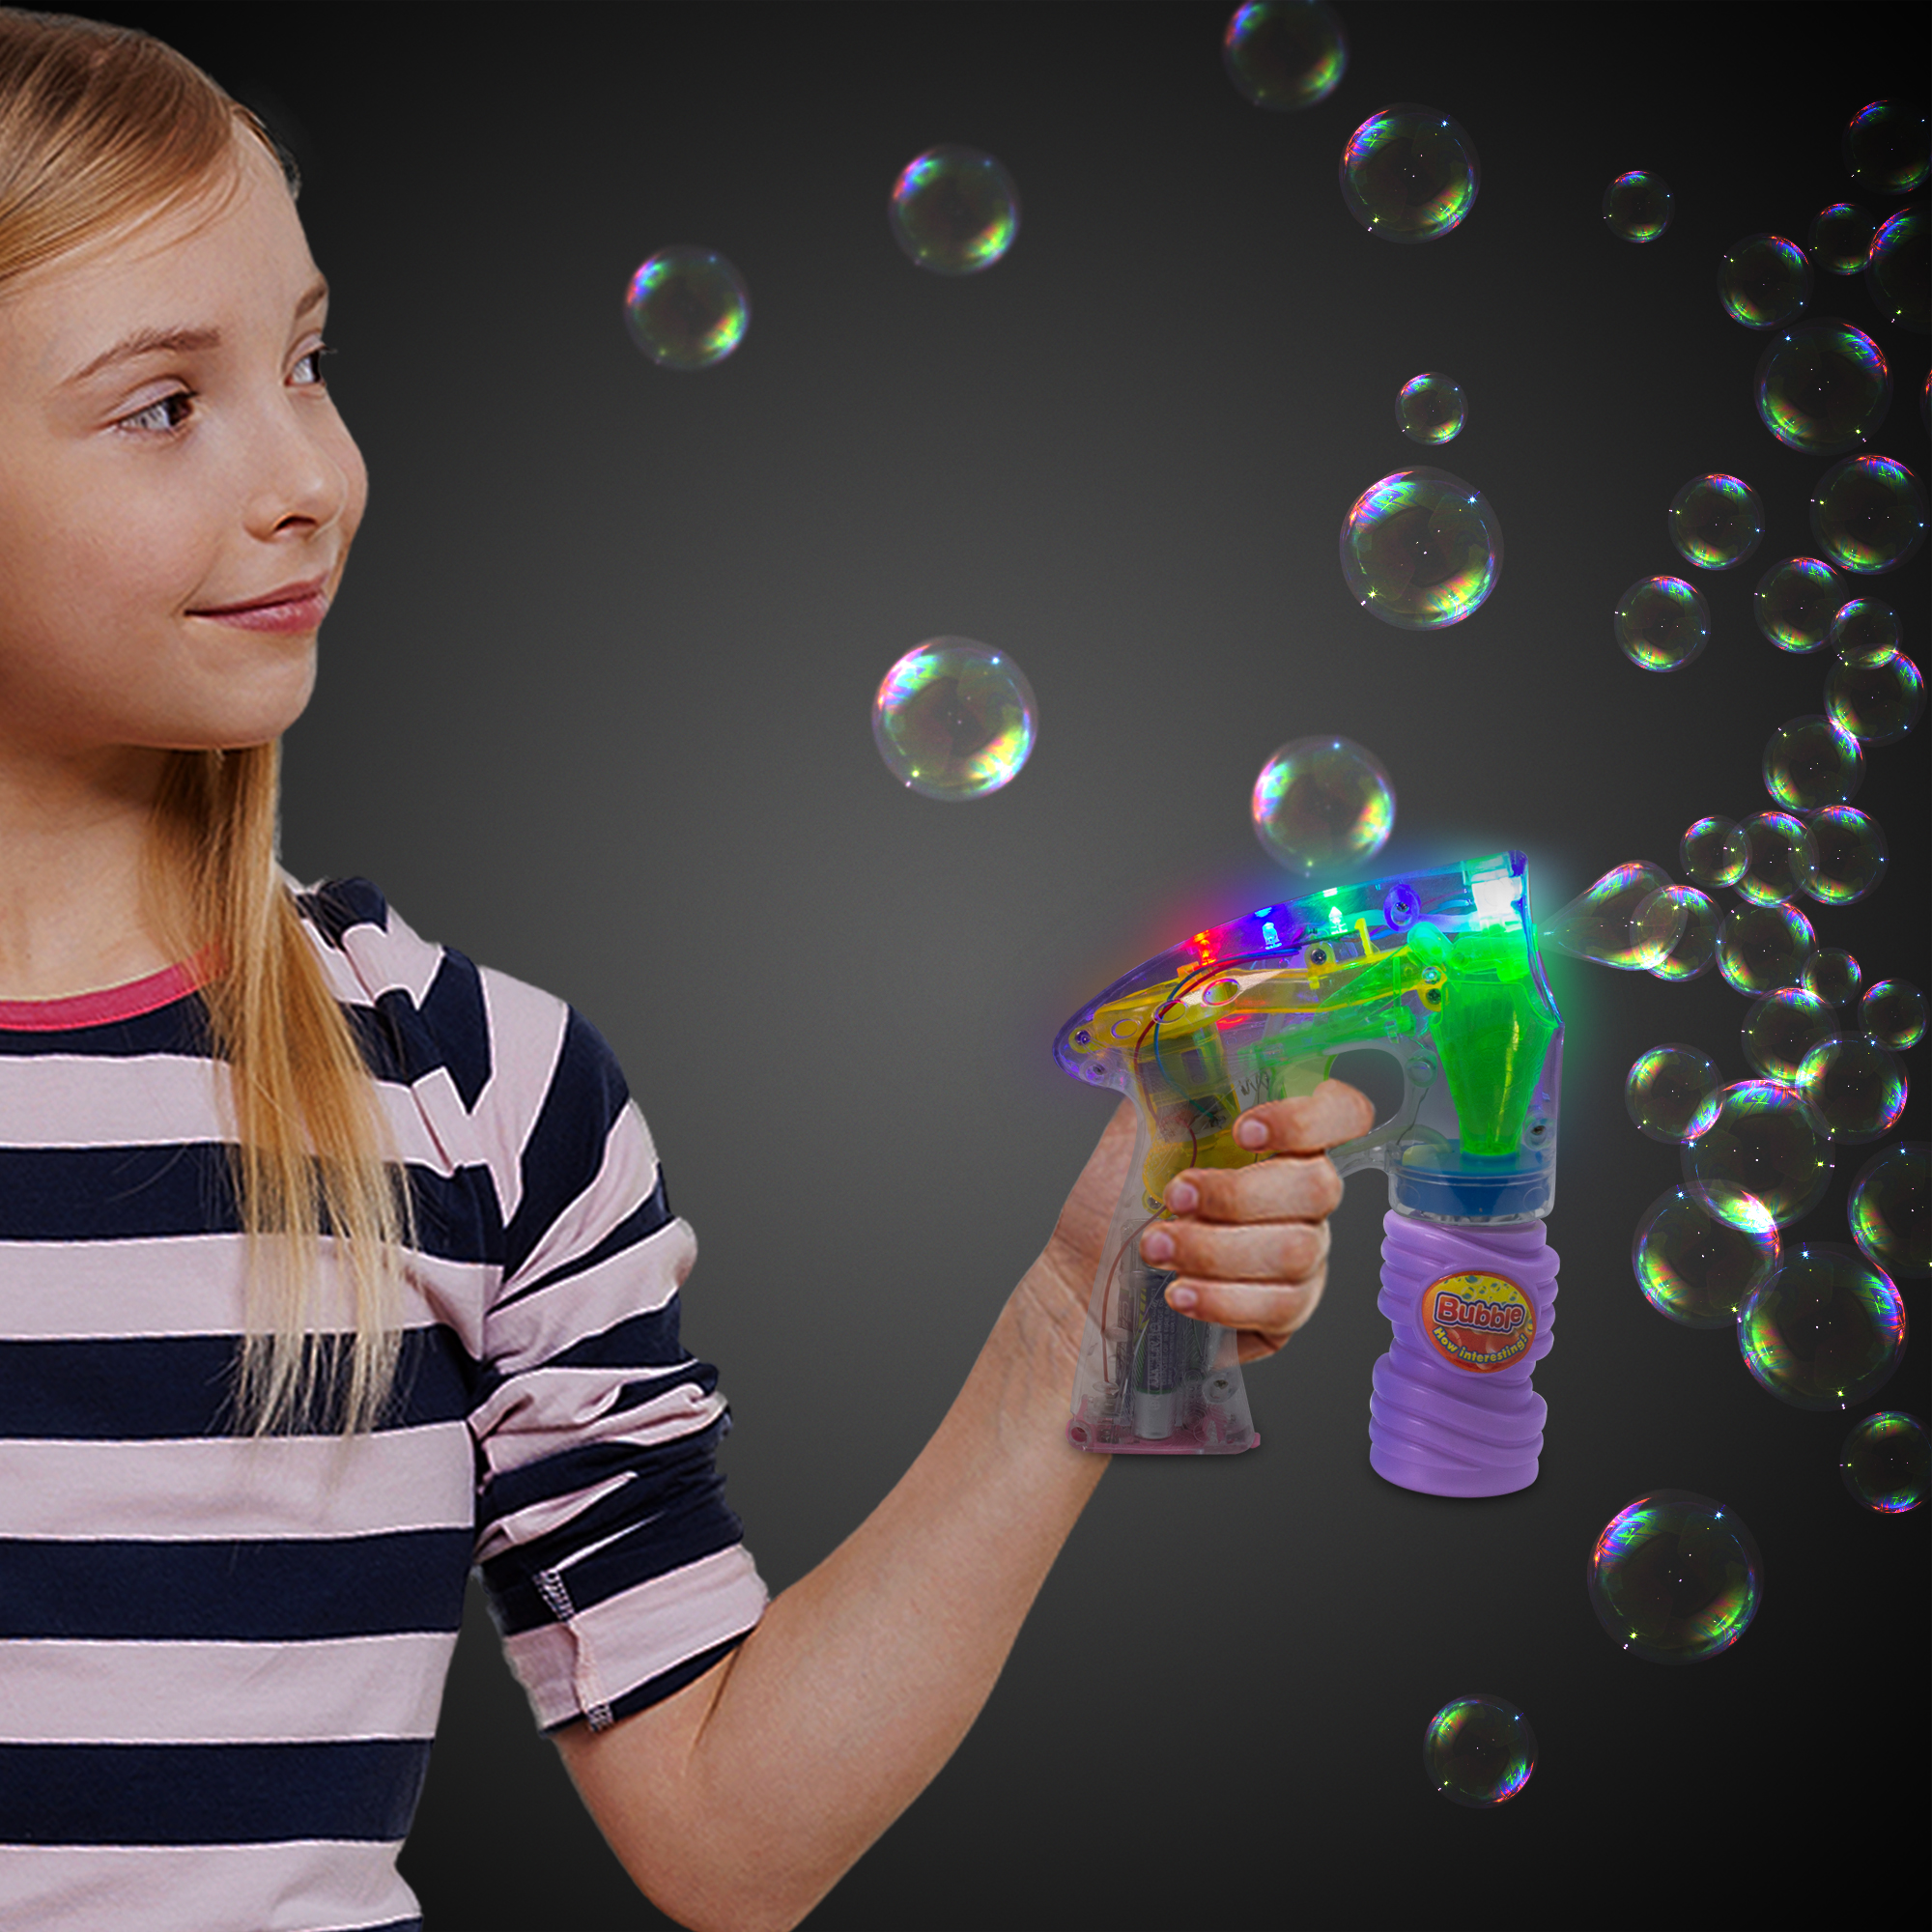 Led Light up Gatling Bubble Gun Demo 2021- Does it Work？ 